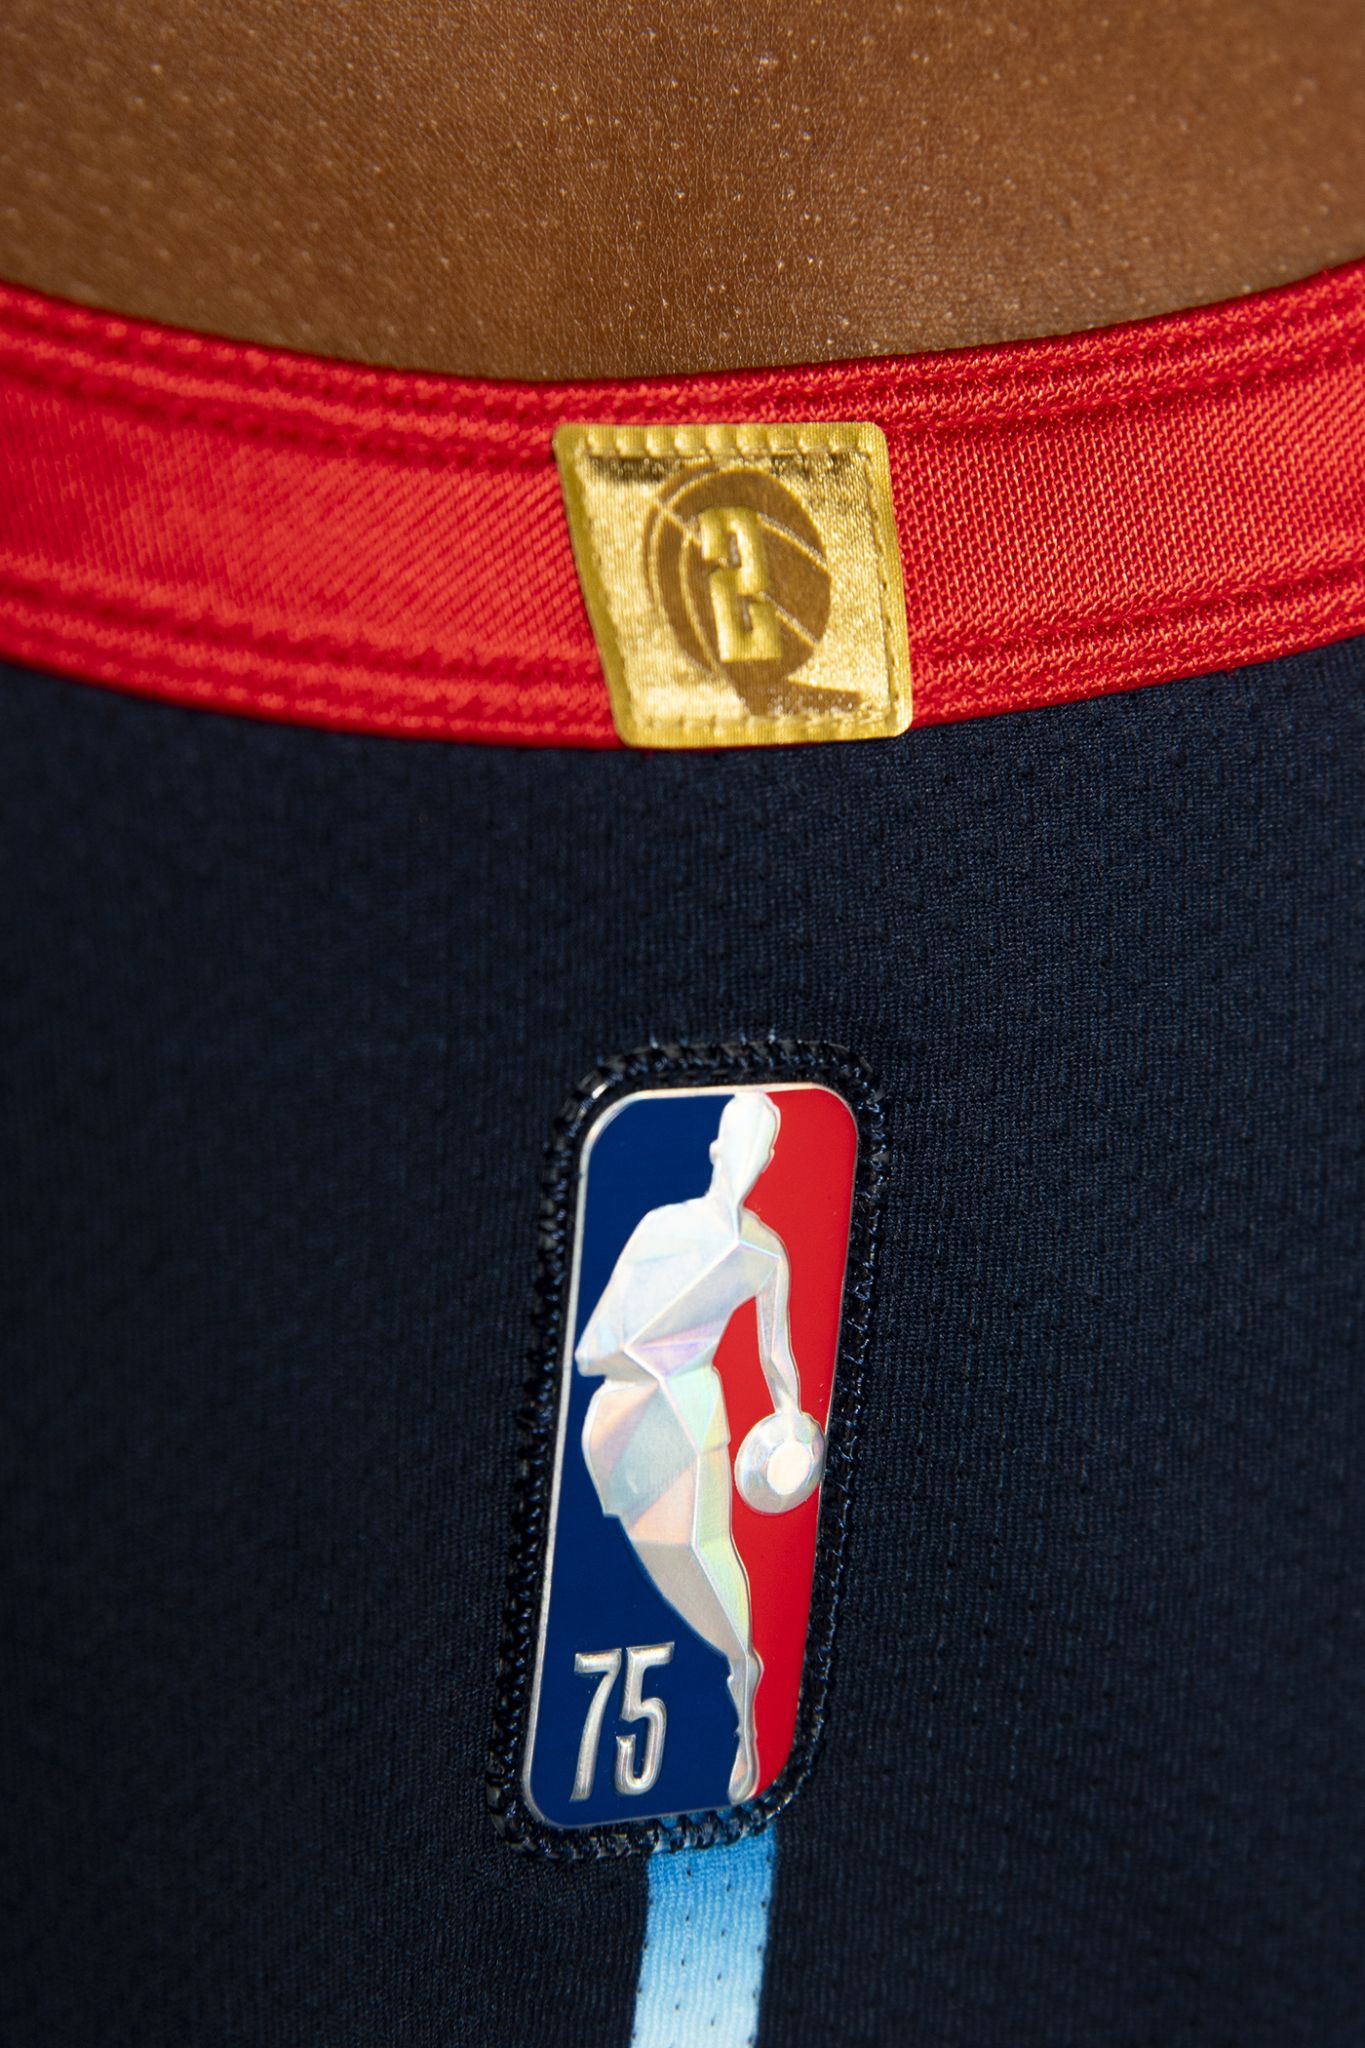 How Rockets' City Edition jerseys blend highlights from all eras